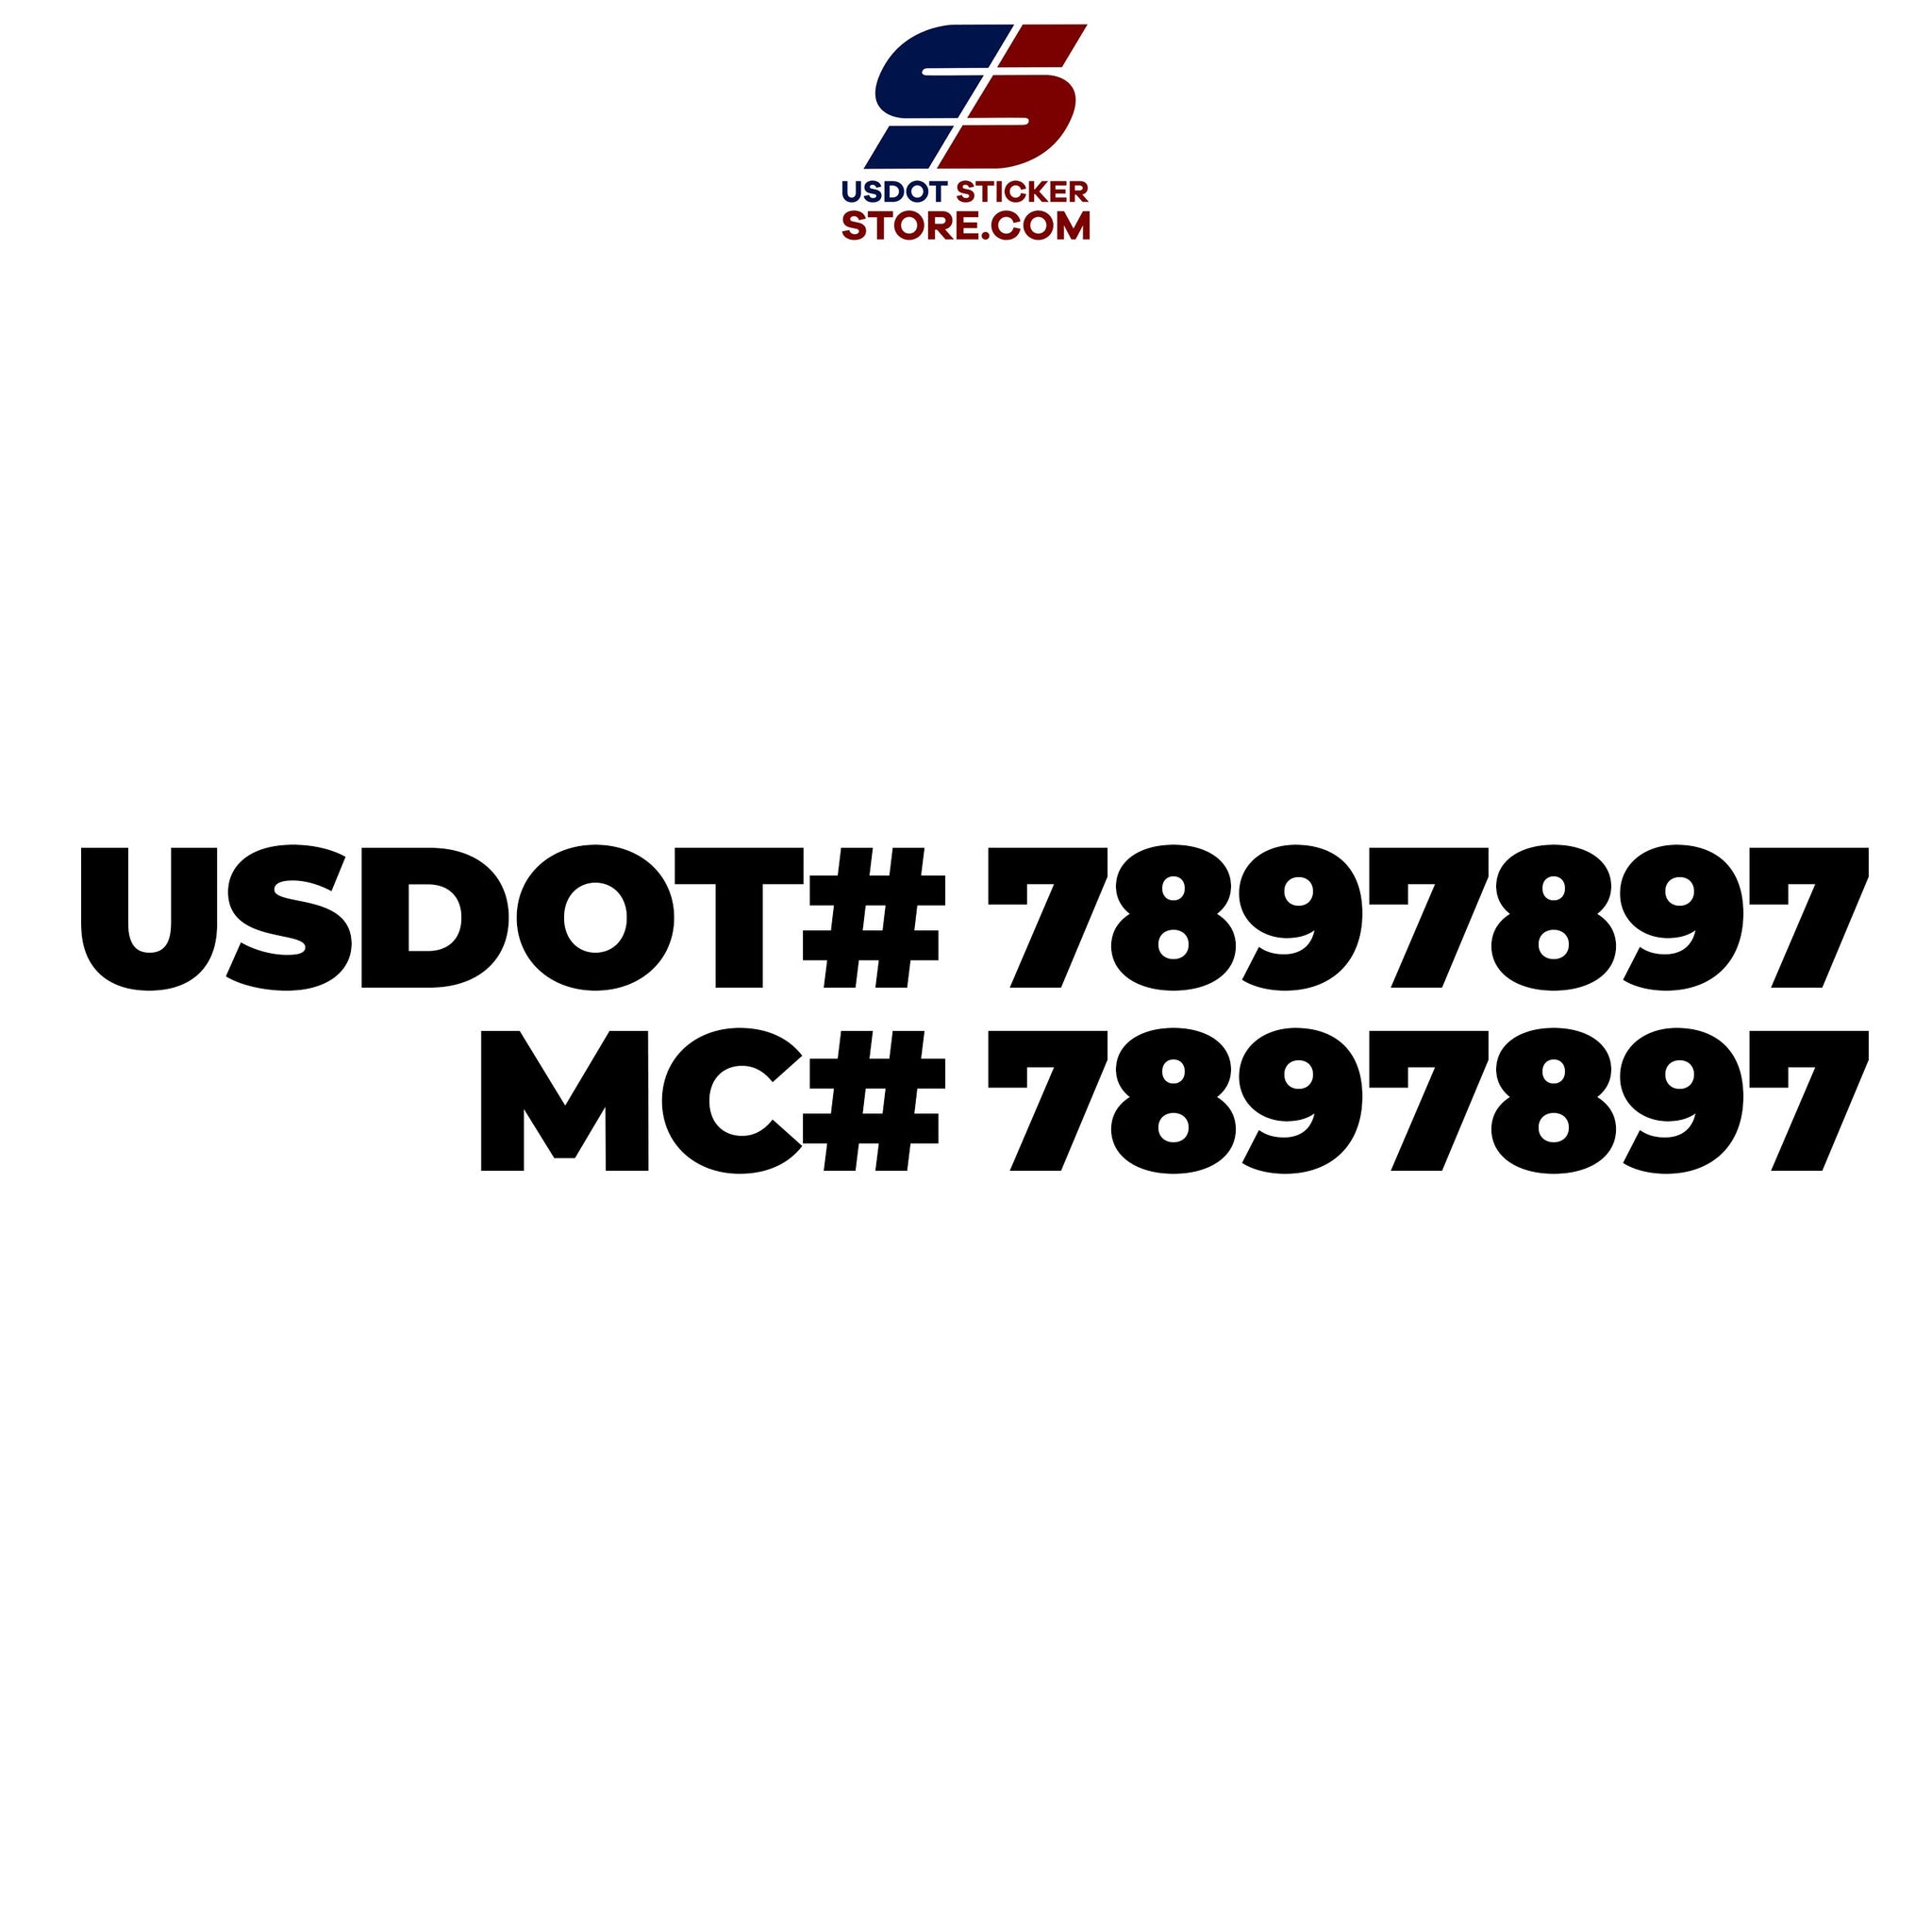 usdot & mc number decal sticker (vinyl lettering)